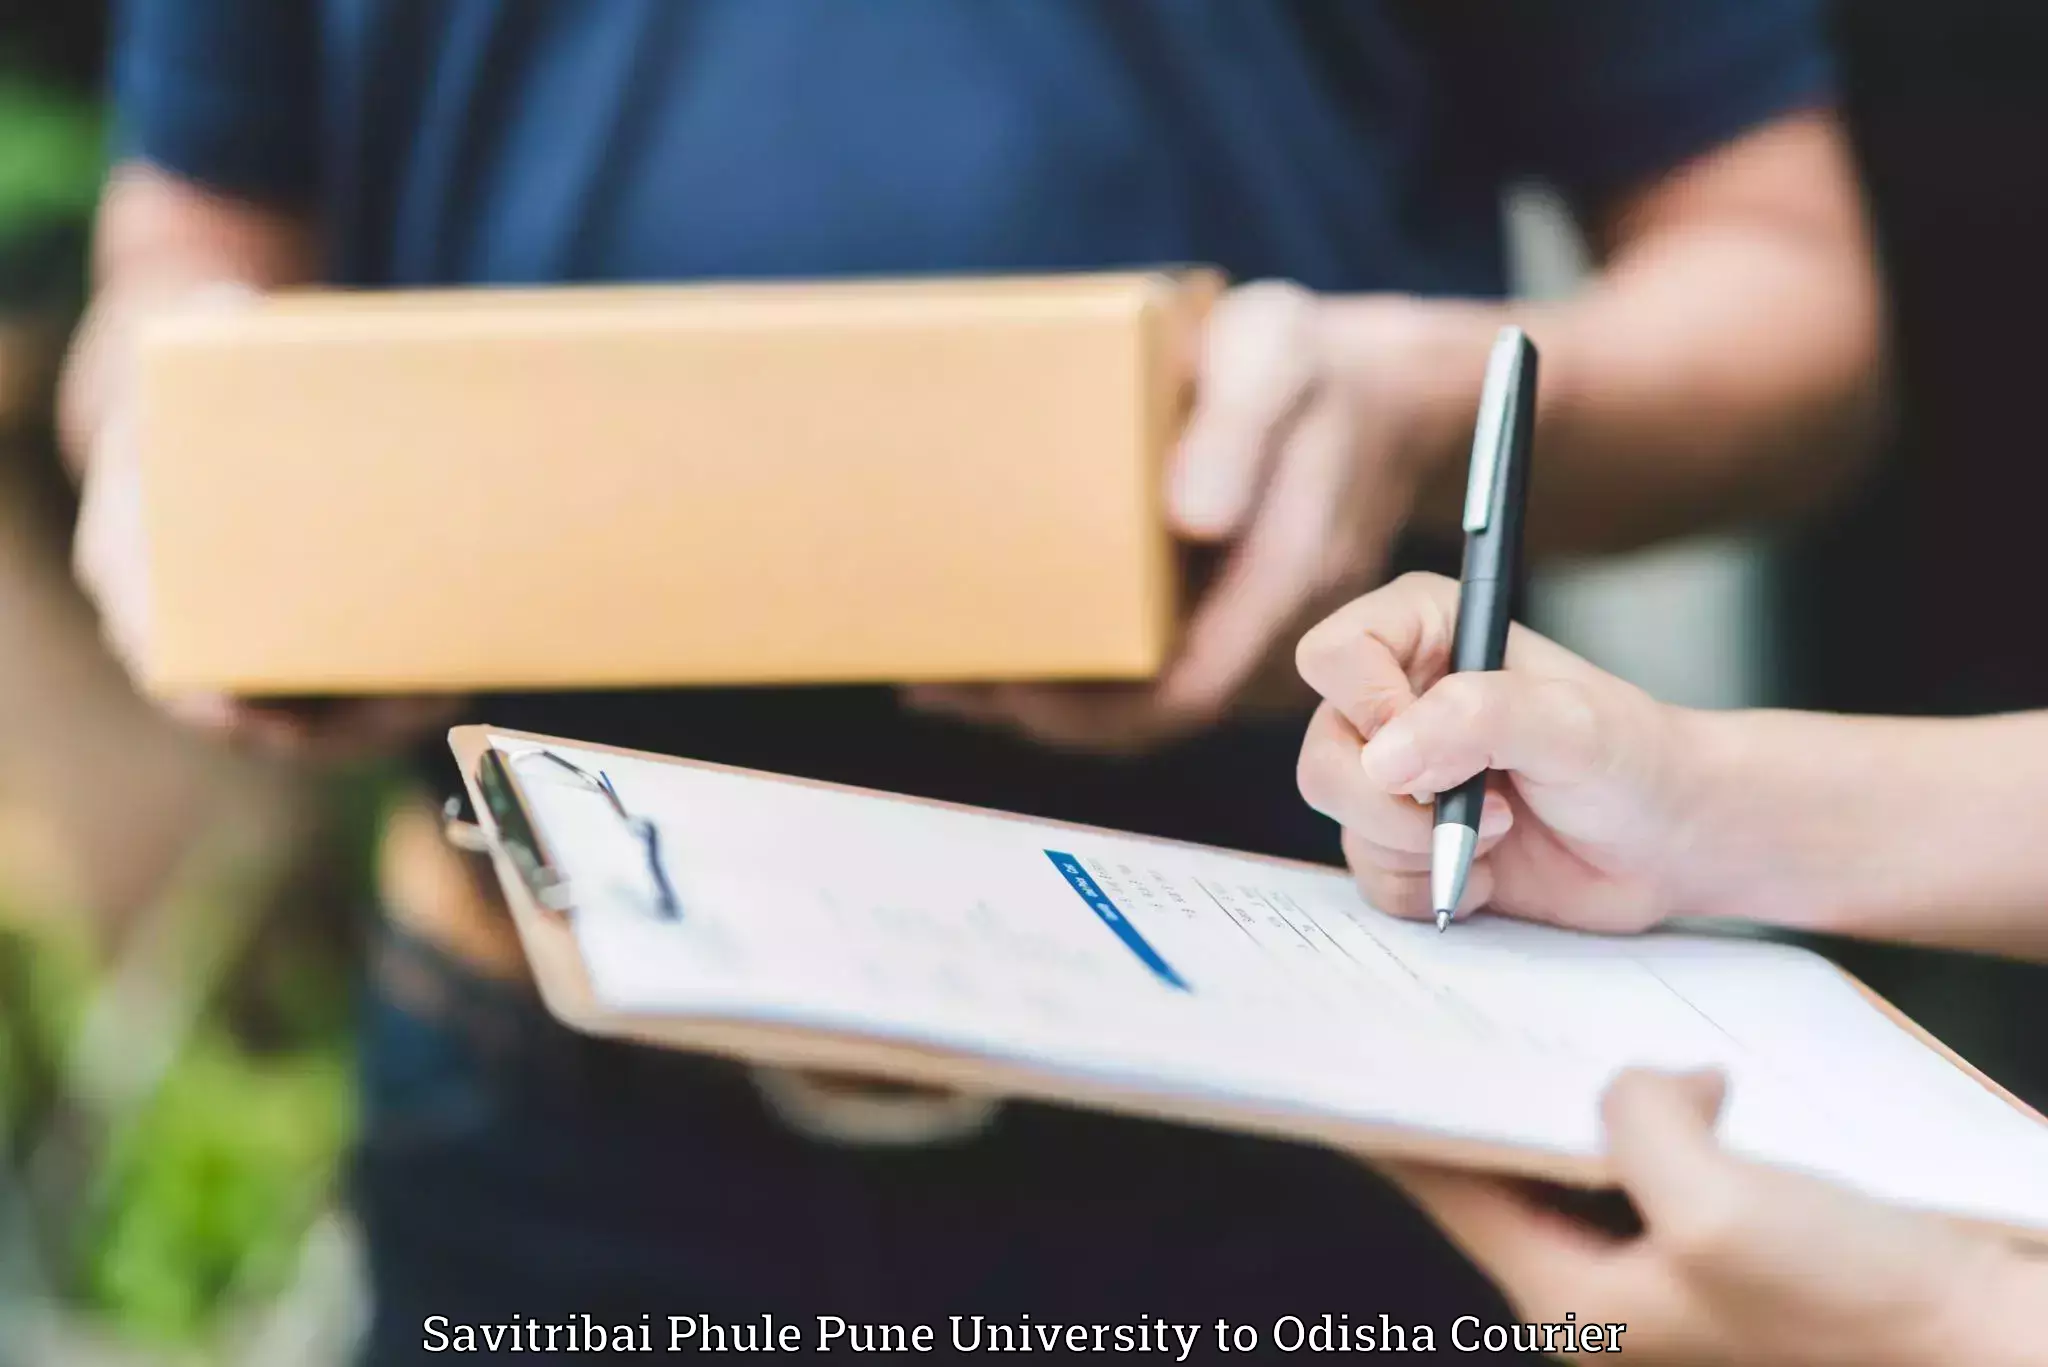 Luggage delivery app Savitribai Phule Pune University to Dandisahi